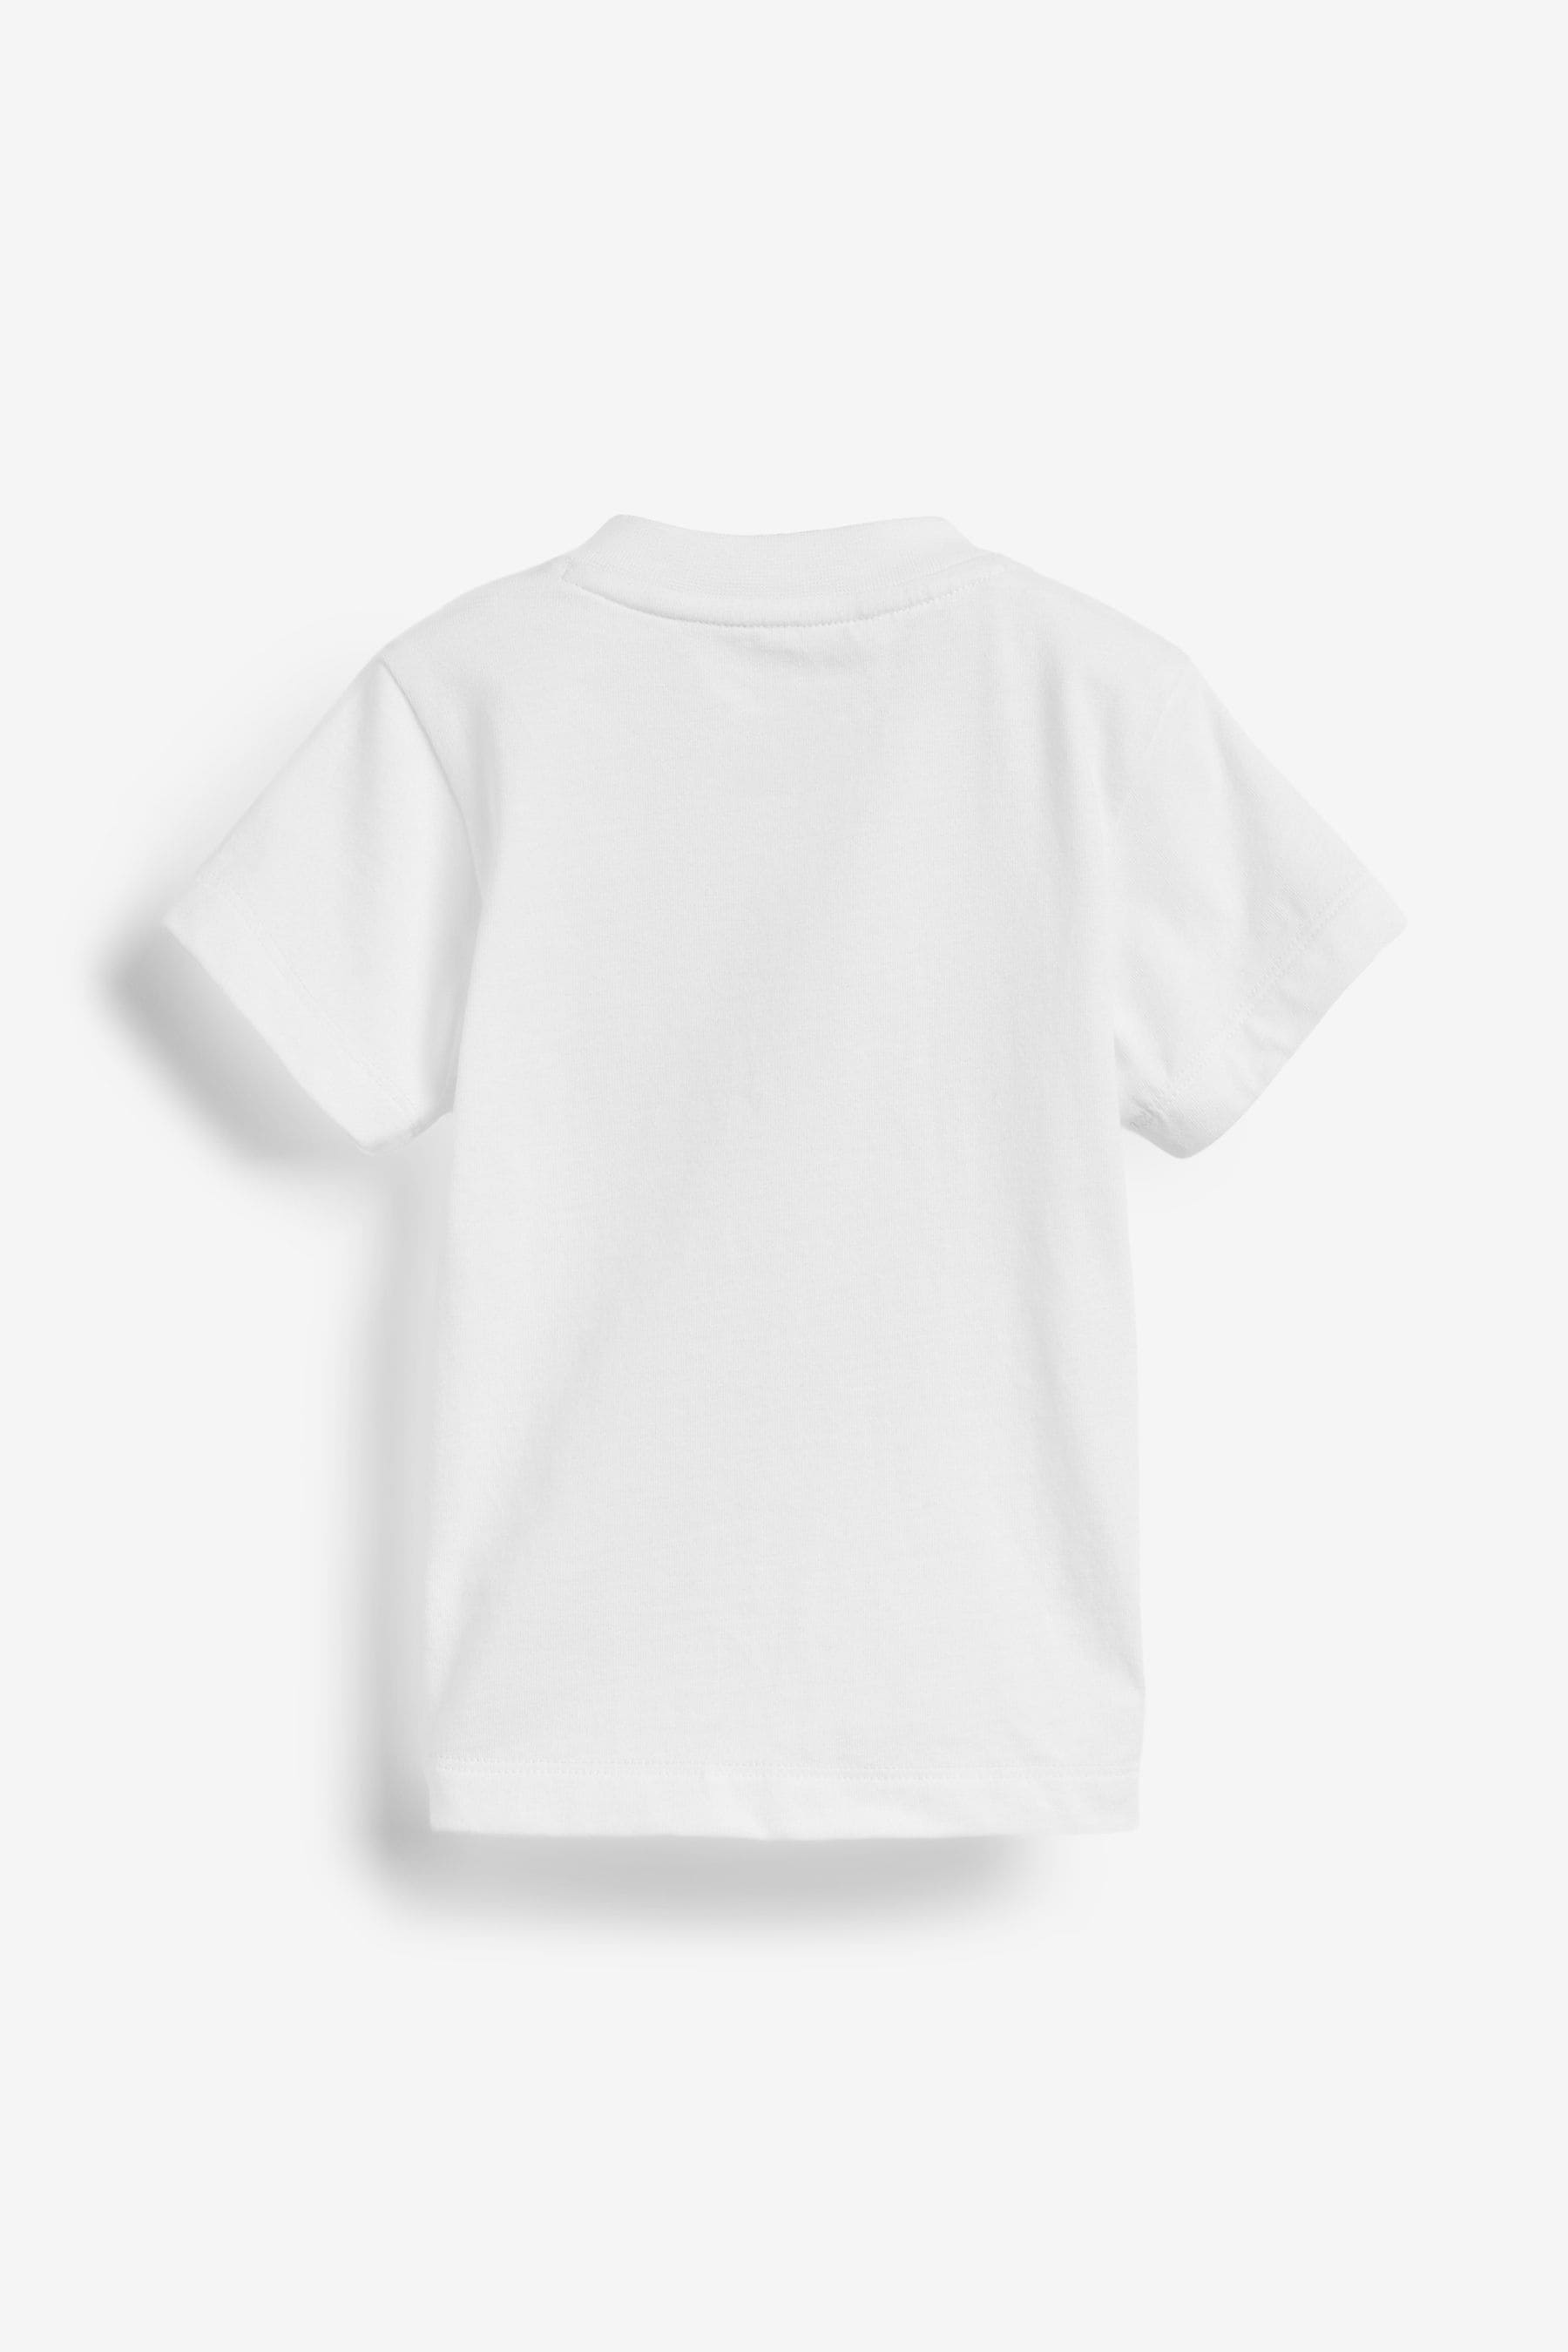 Buy Originals Trefoil T-Shirt from the Next UK online shop